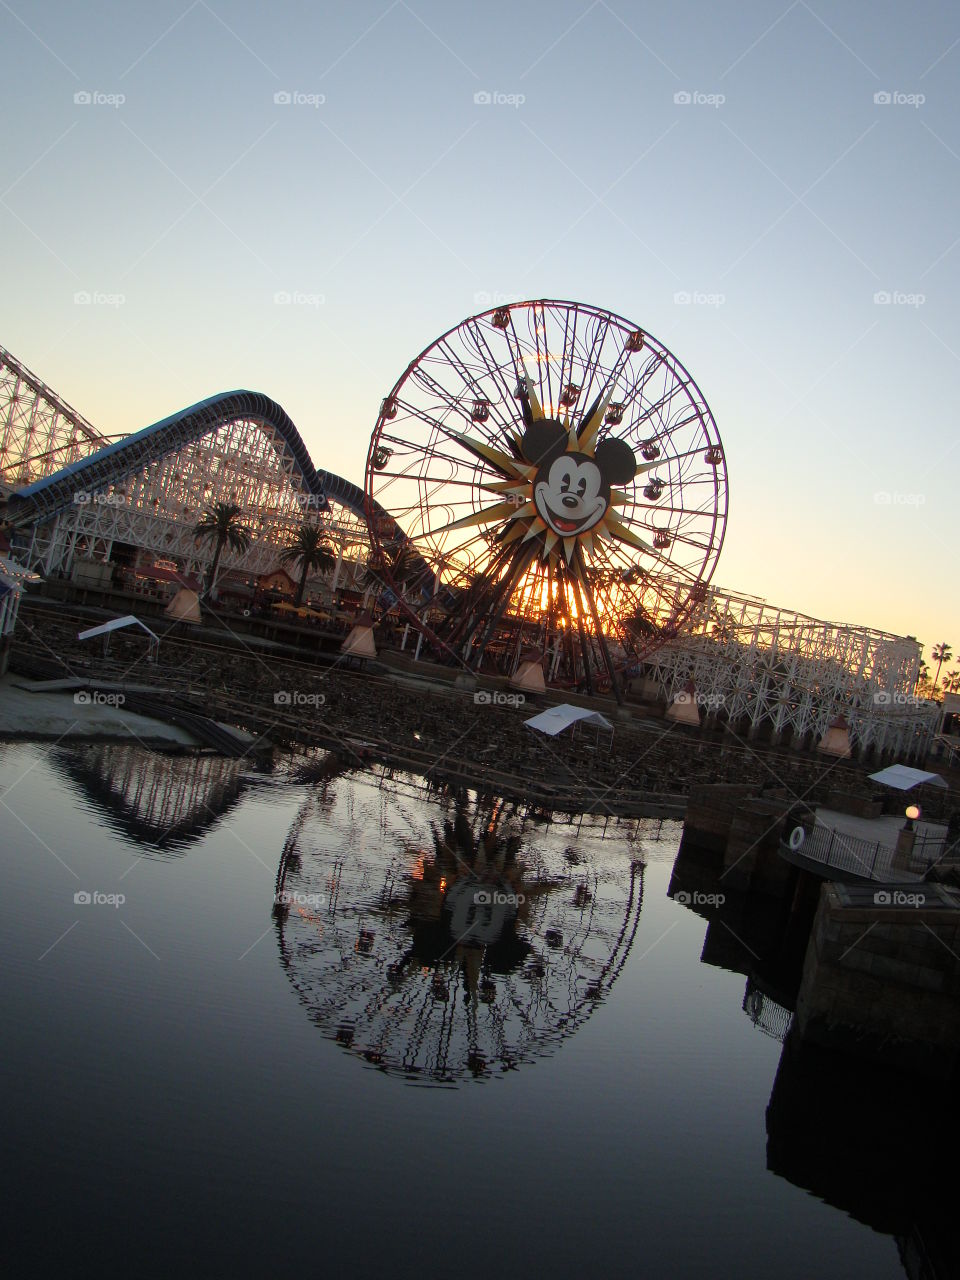 Mickeys fun wheel